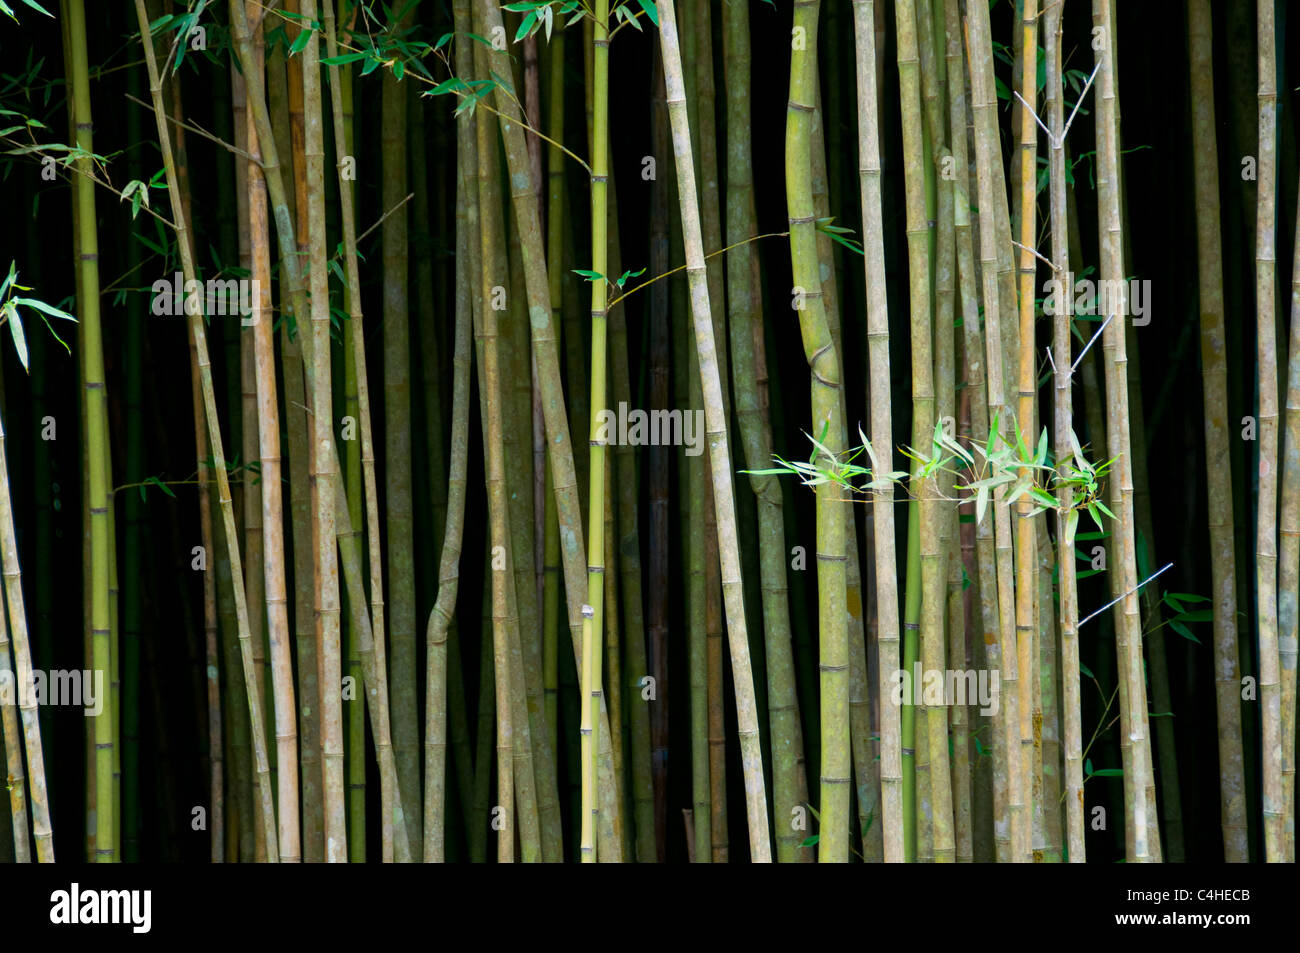 Bamboo trees Costa Rica Stock Photo - Alamy